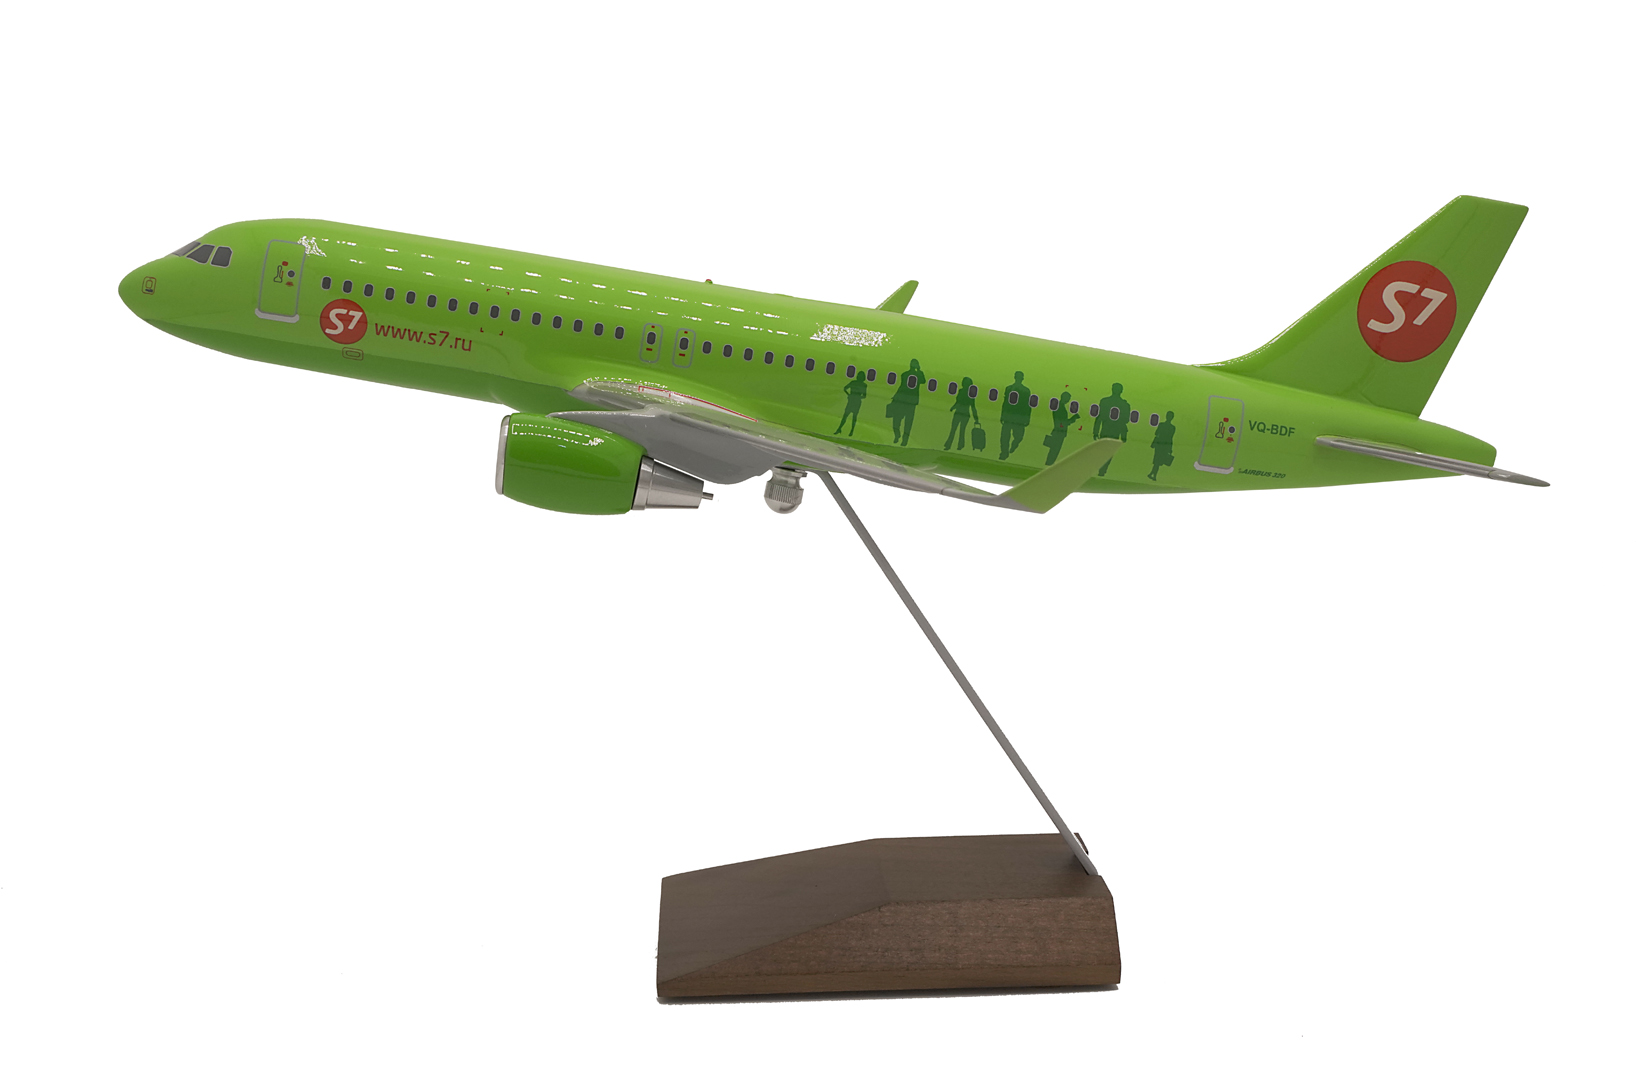    A-320   (S7 Airlines),  1:100,   37,5 . # 1 hobbyplus.ru